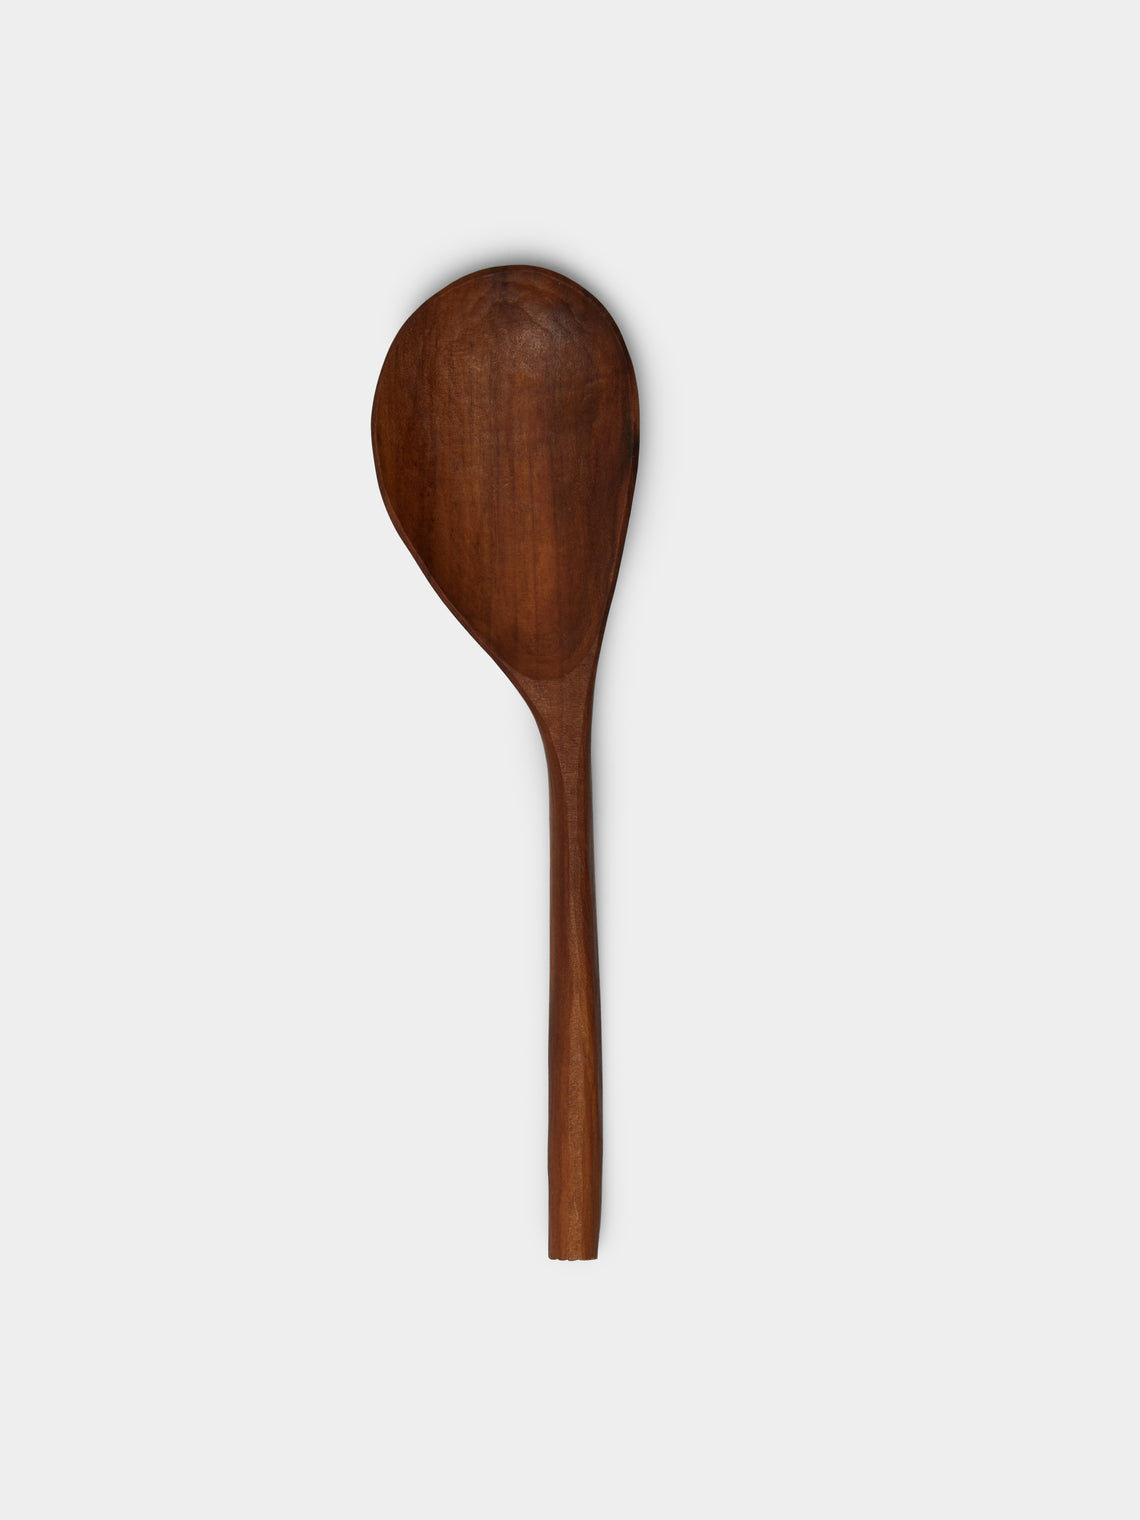 Rabea Gebler - Oiled Cherry Wood Spoons (Set of 4) -  - ABASK